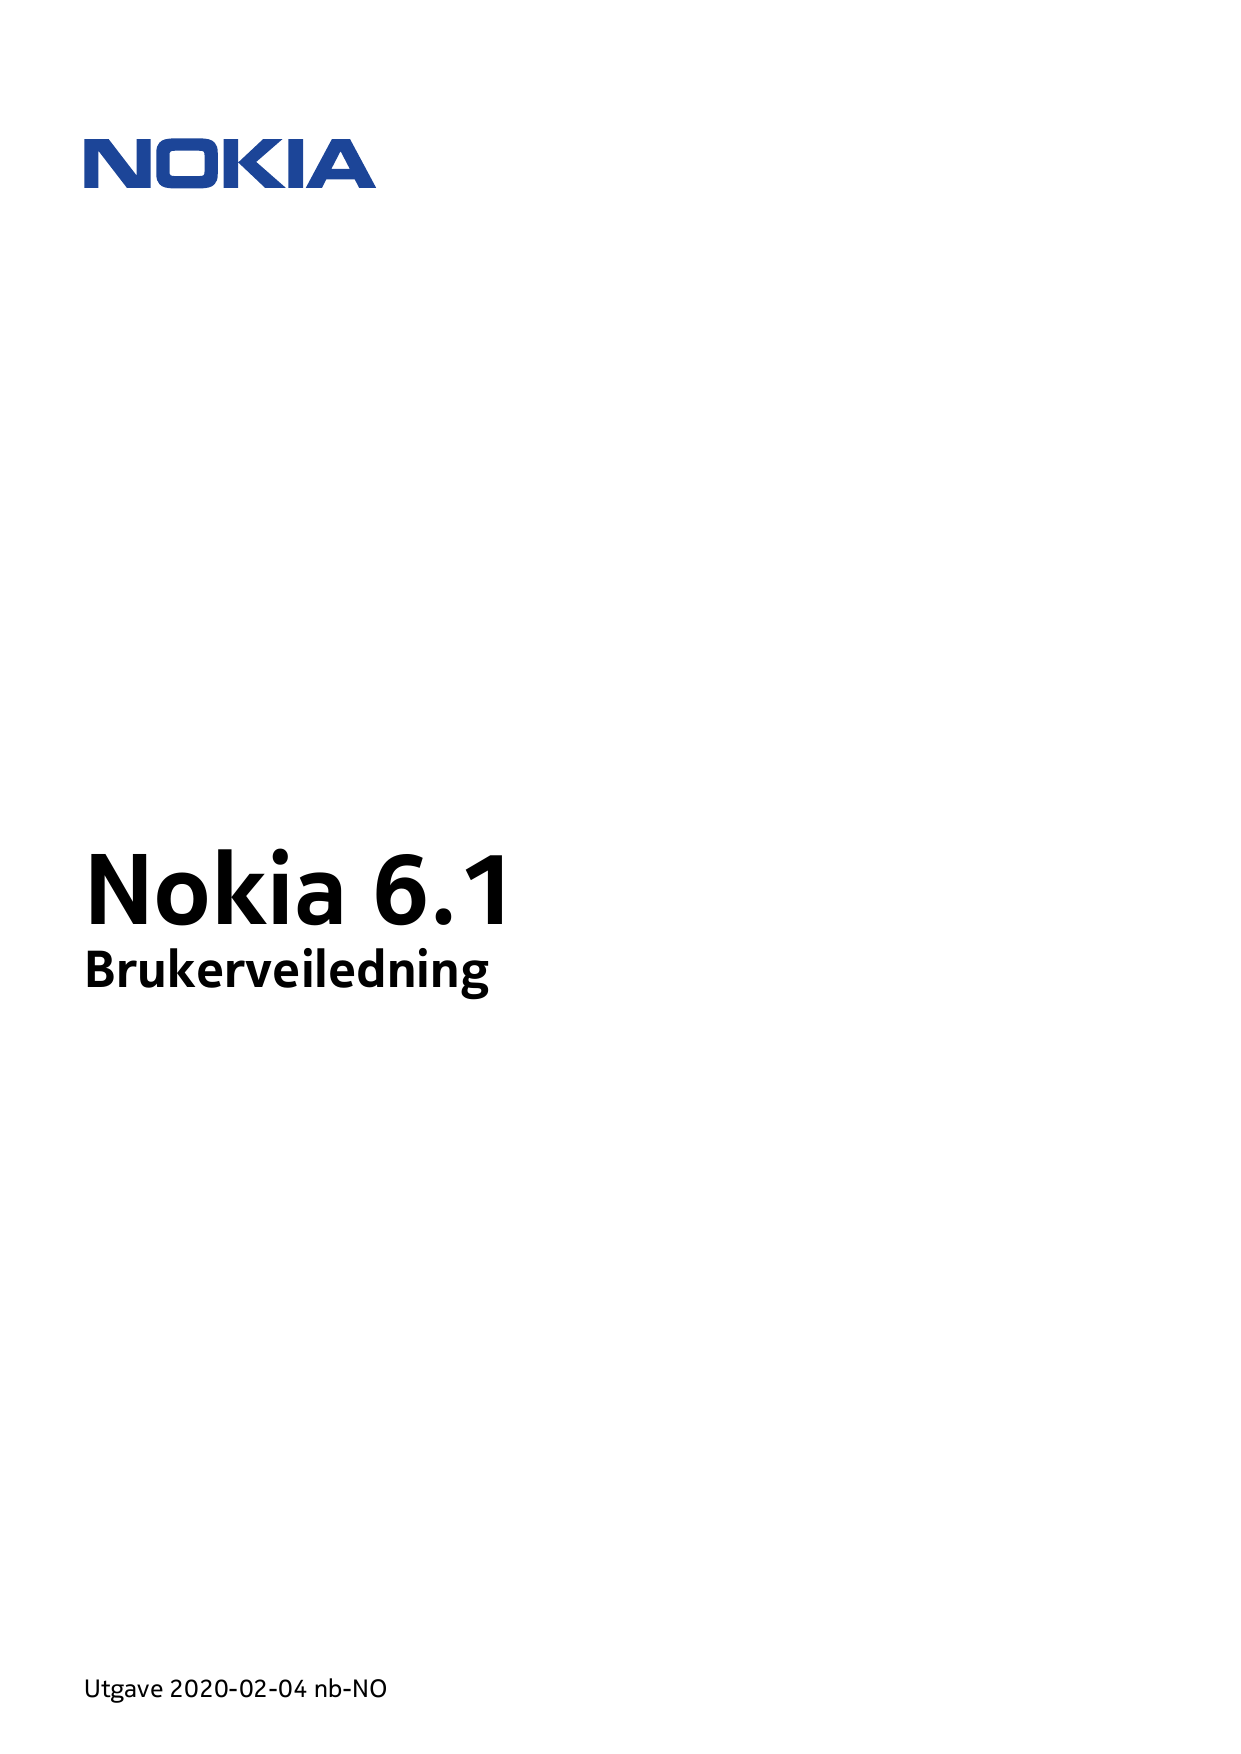 Nokia 6.1BrukerveiledningUtgave 2020-02-04 nb-NO